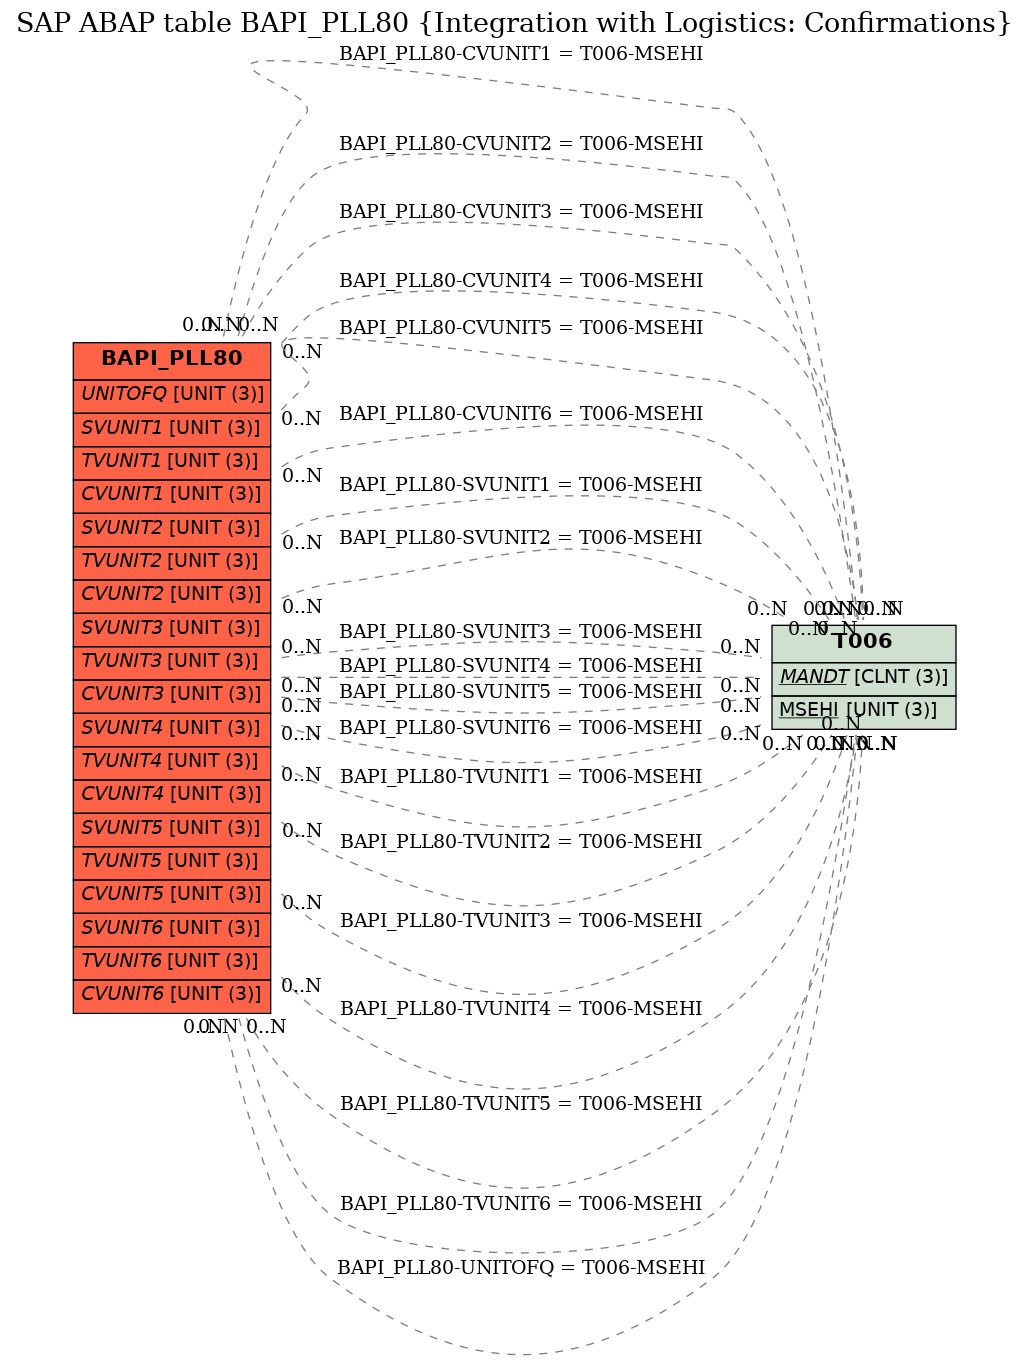 E-R Diagram for table BAPI_PLL80 (Integration with Logistics: Confirmations)